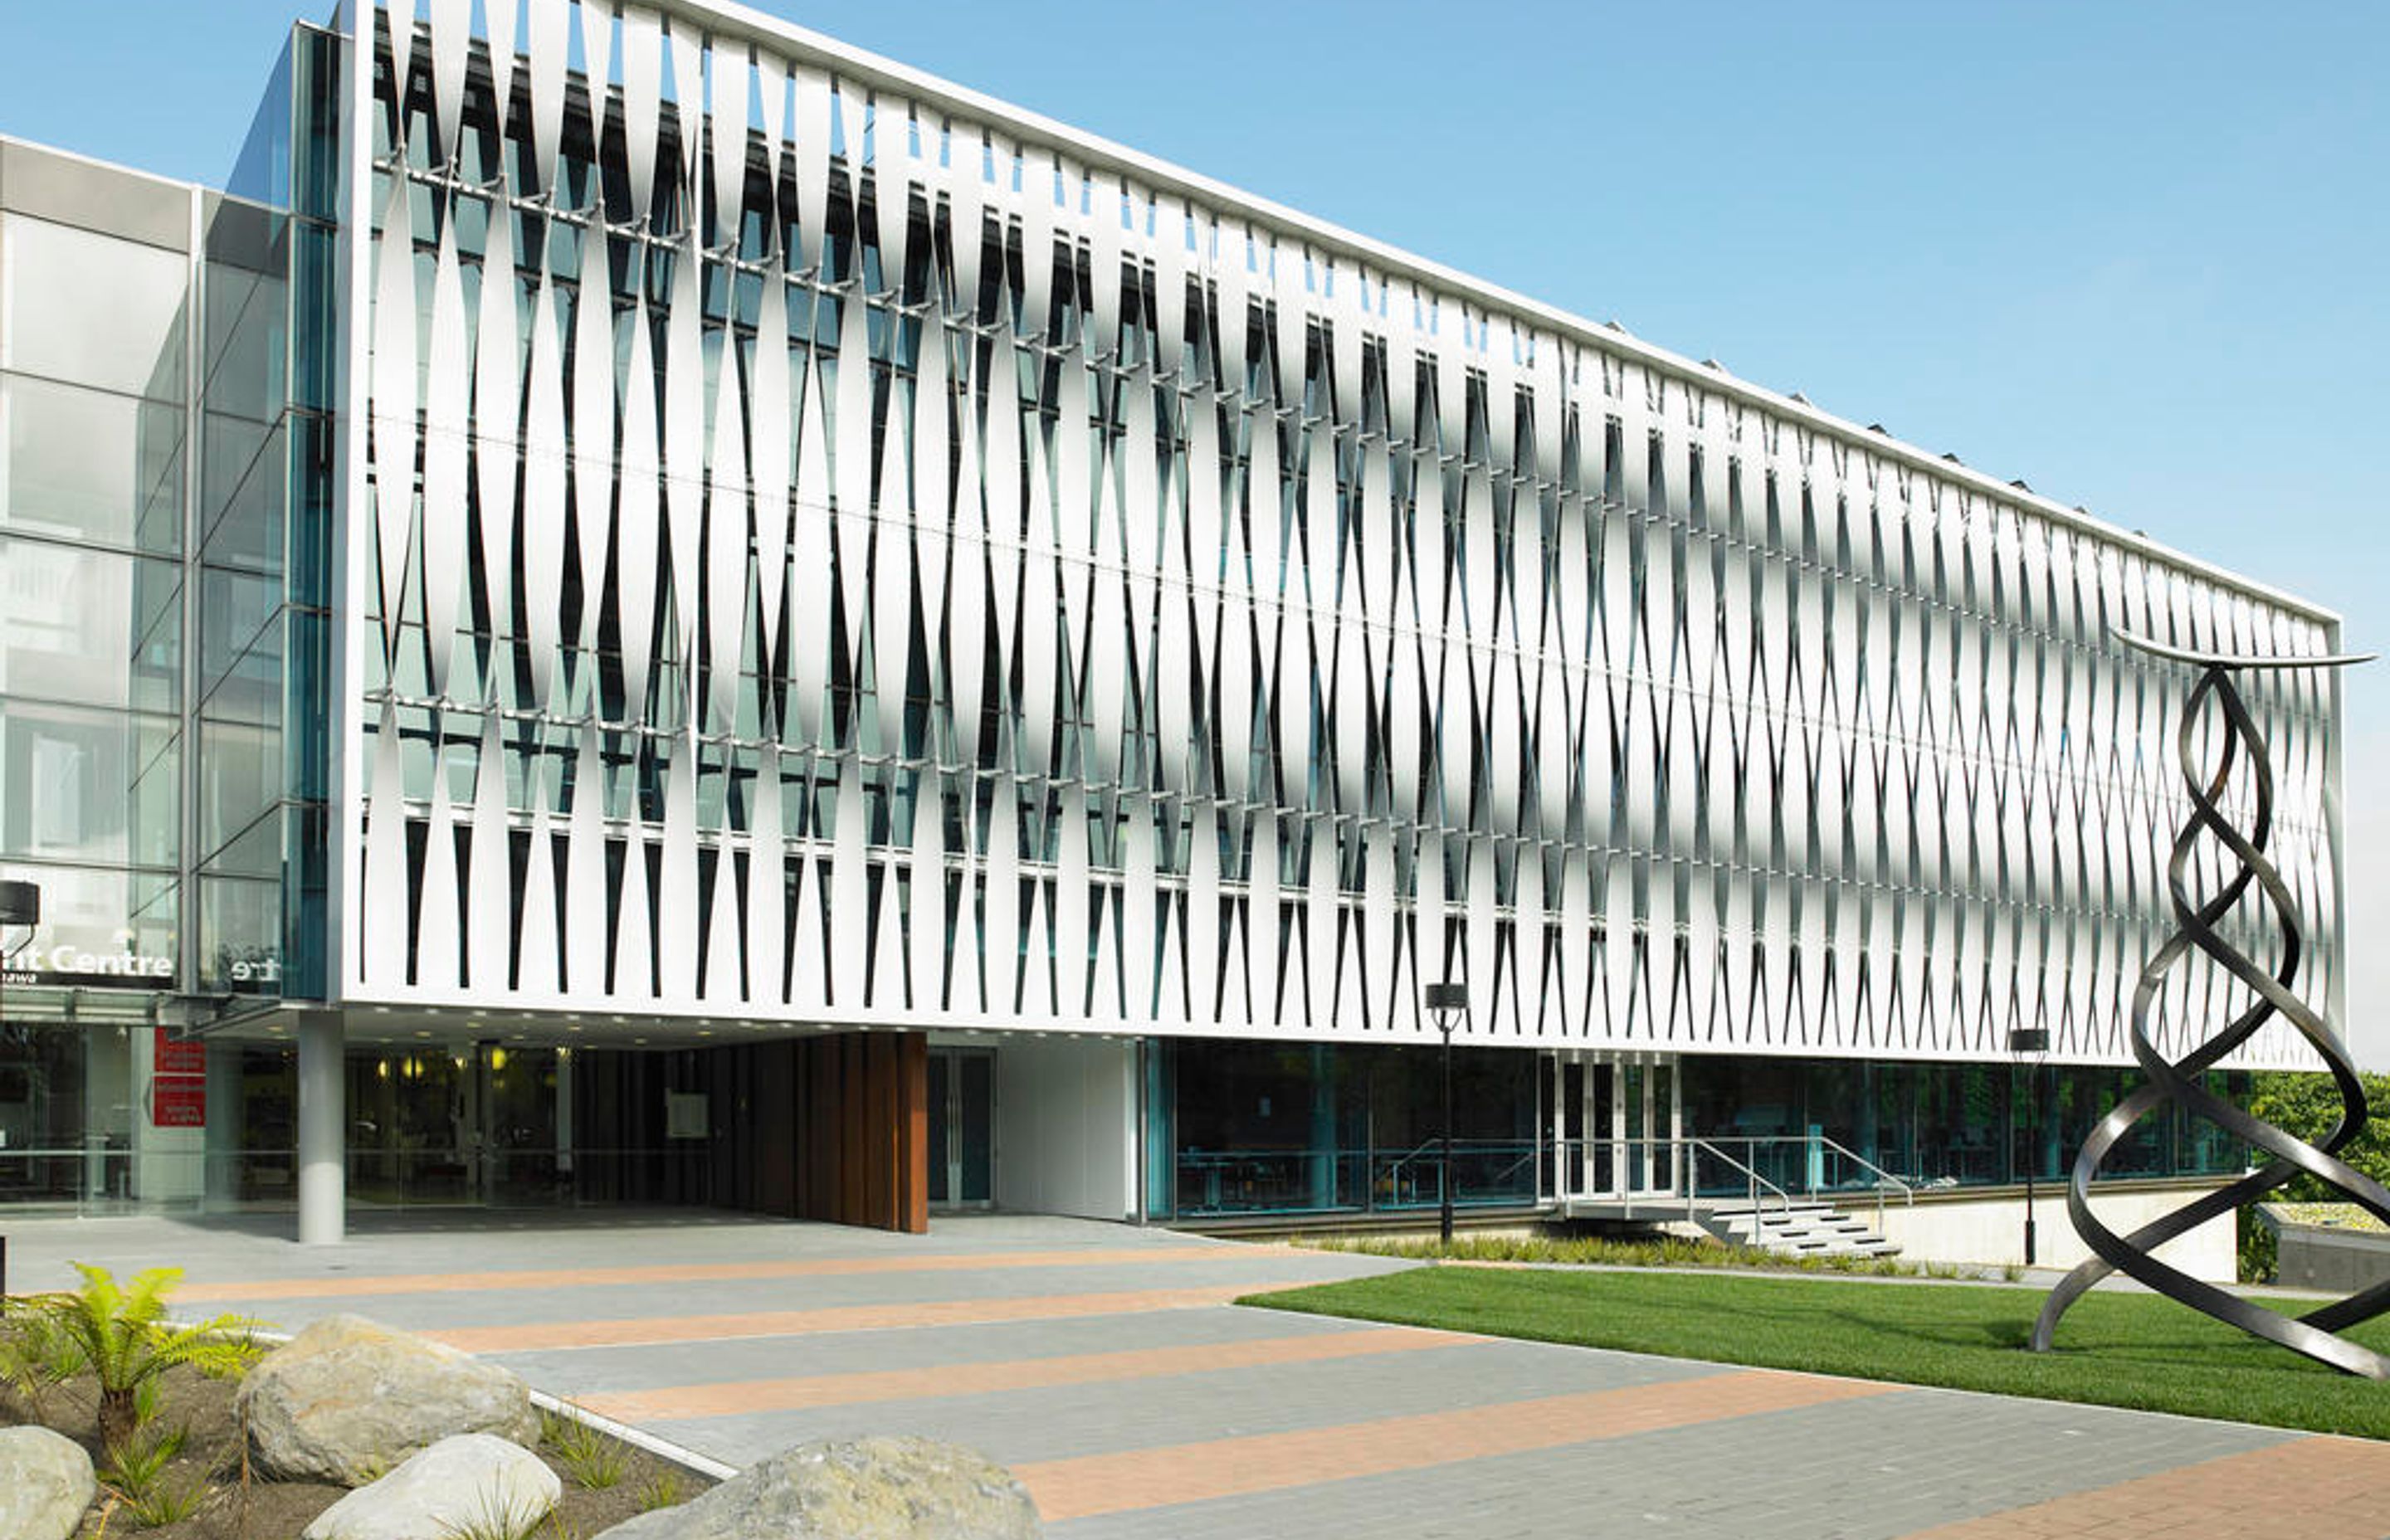 University of Waikato - Art and concrete combine